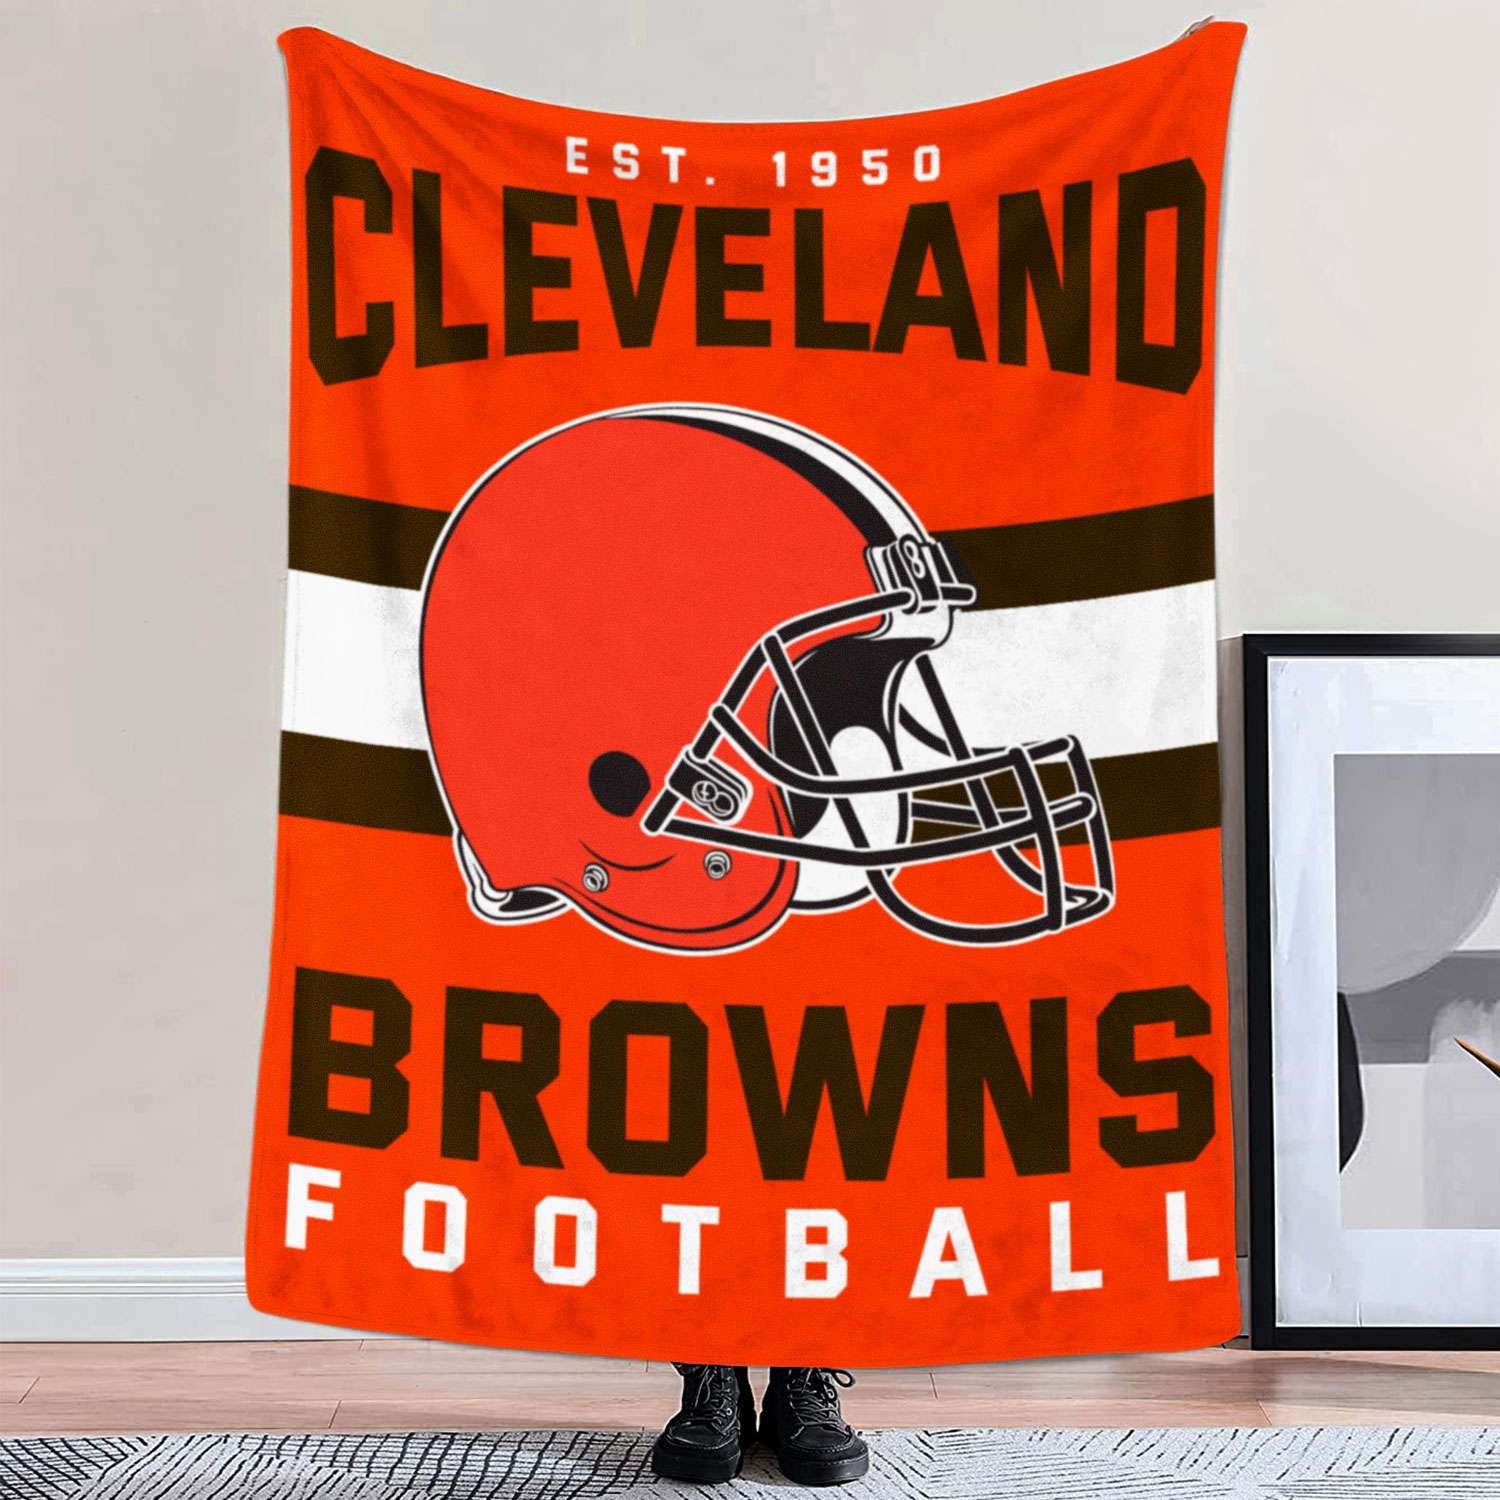 Cleveland Browns NFL Football Team Helmet Blanket